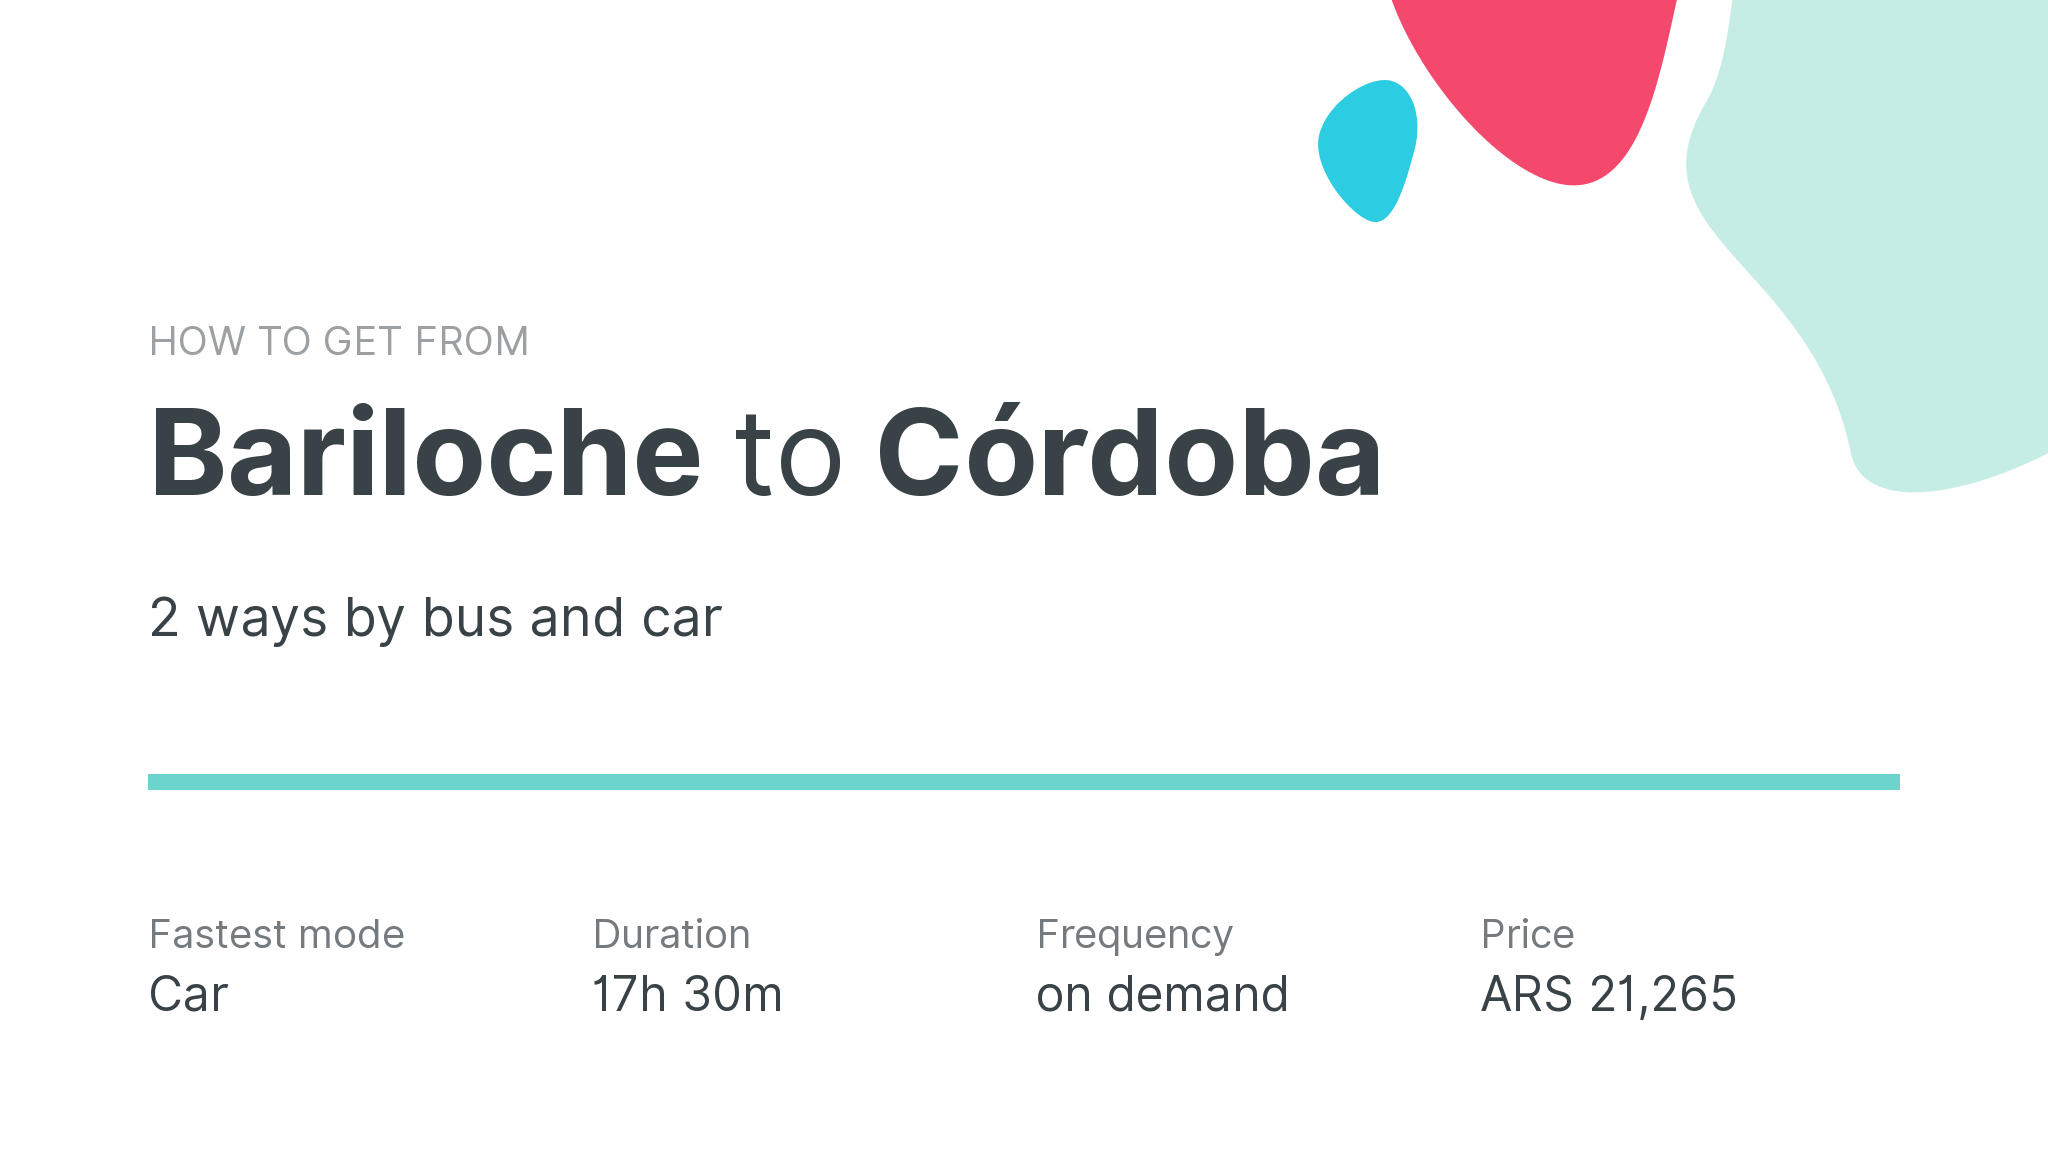 How do I get from Bariloche to Córdoba